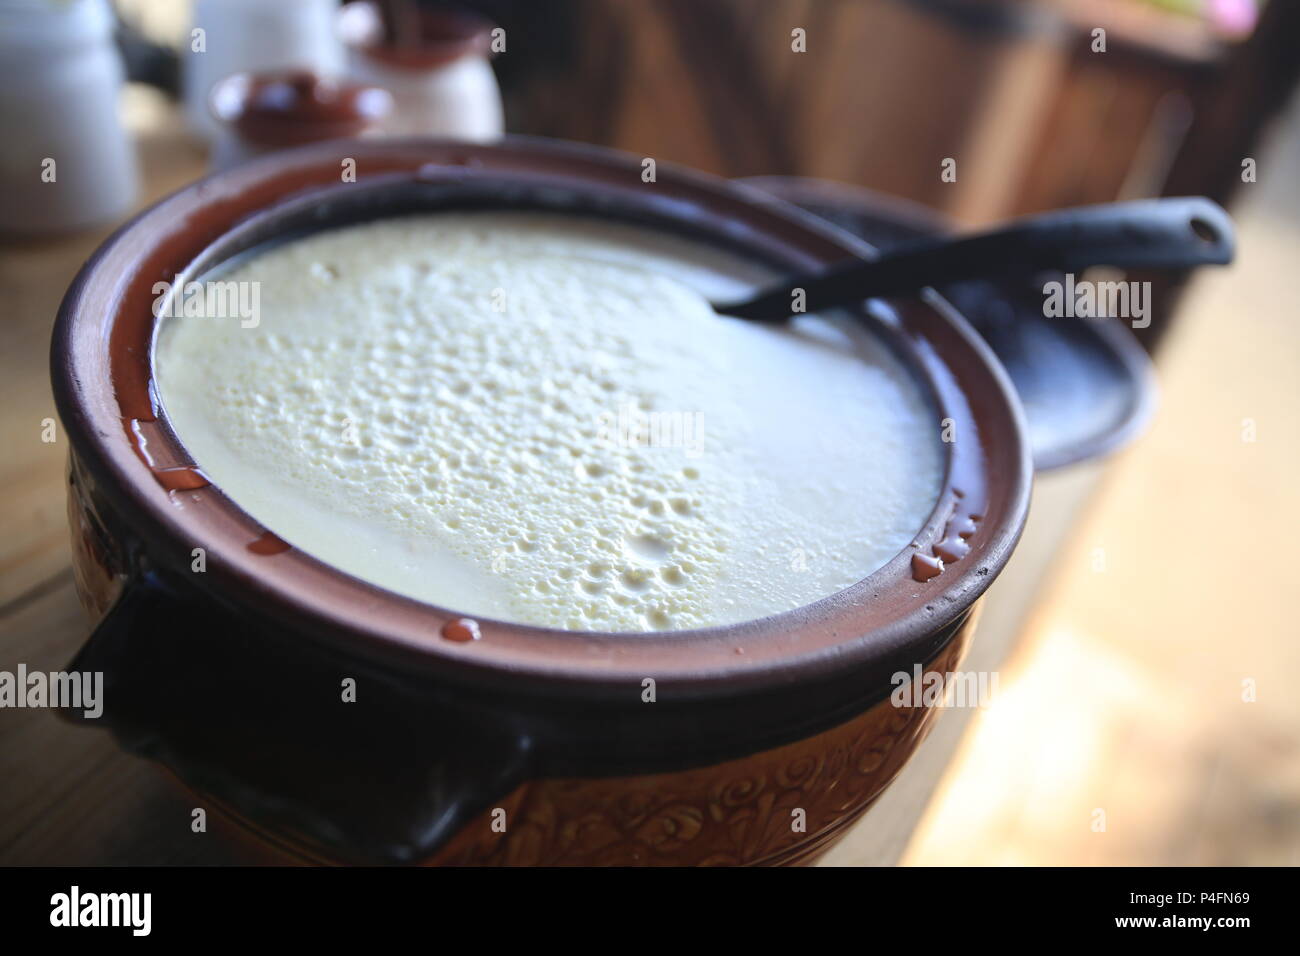 Bulgarische Joghurt in eine Schüssel geben, closeup erschossen  Stockfotografie - Alamy